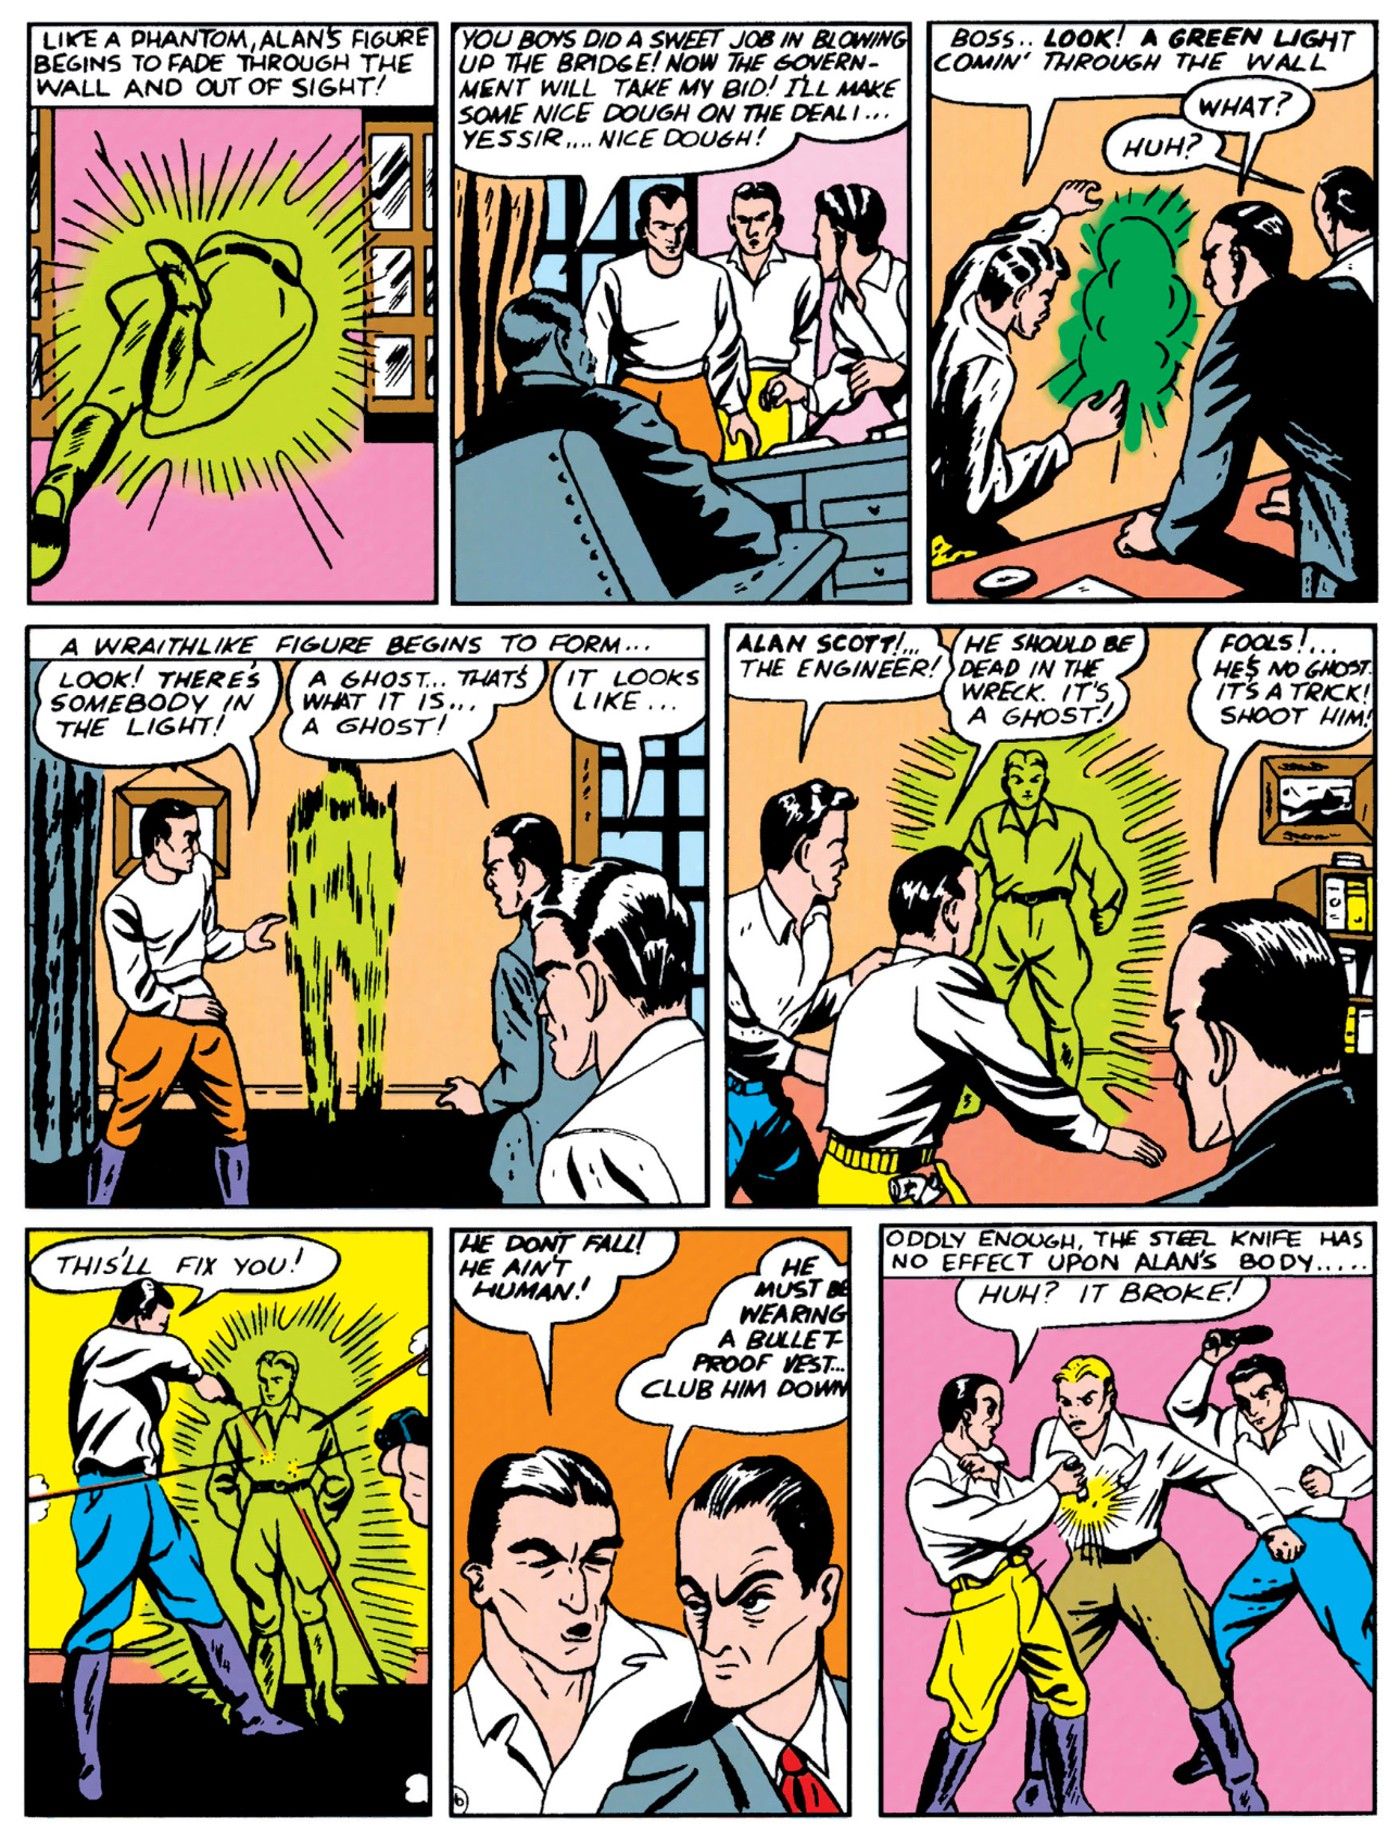 Green Lantern Alan Scott Demonstrates His Amazing Powers